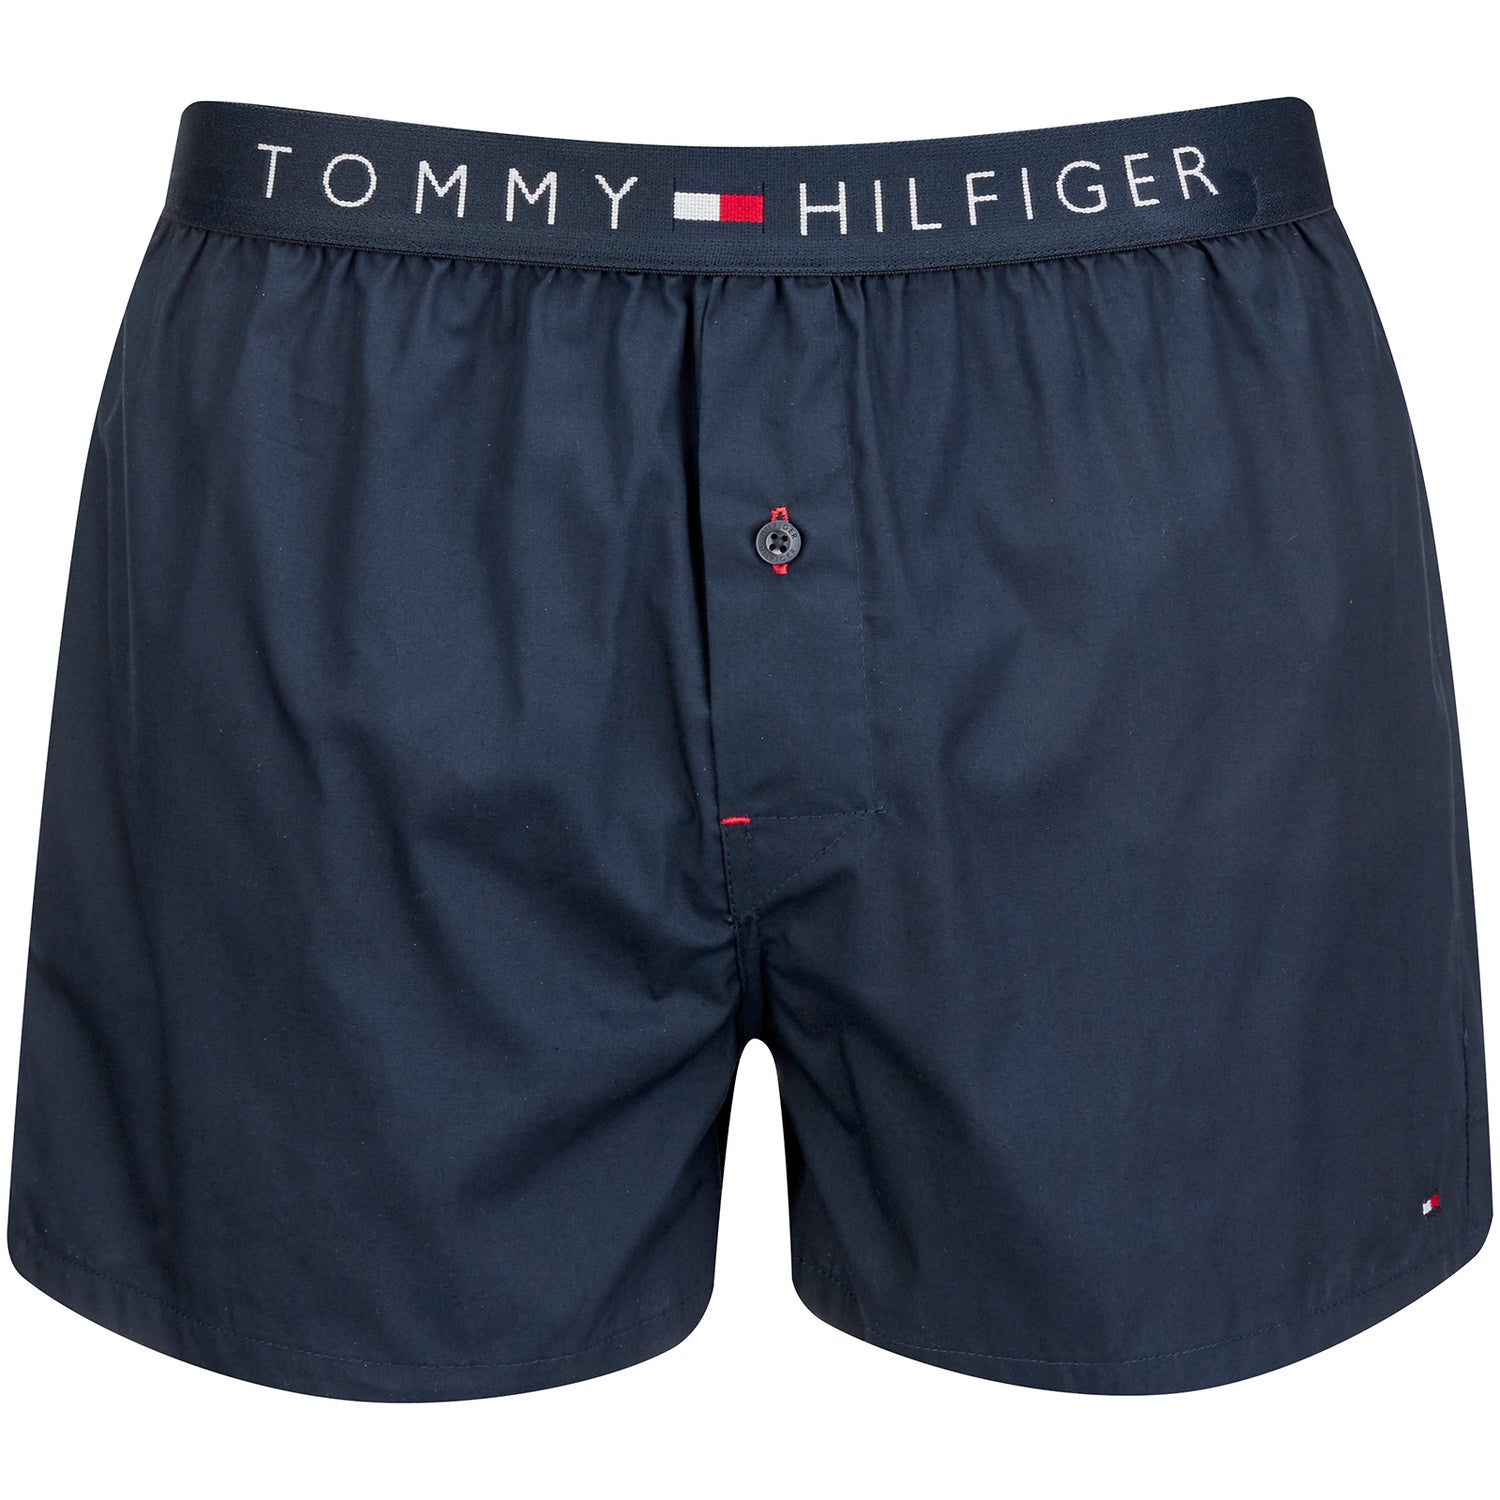 Tommy Hilfiger Men's Smart Cotton Poplin Boxers - Navy Blazer - S